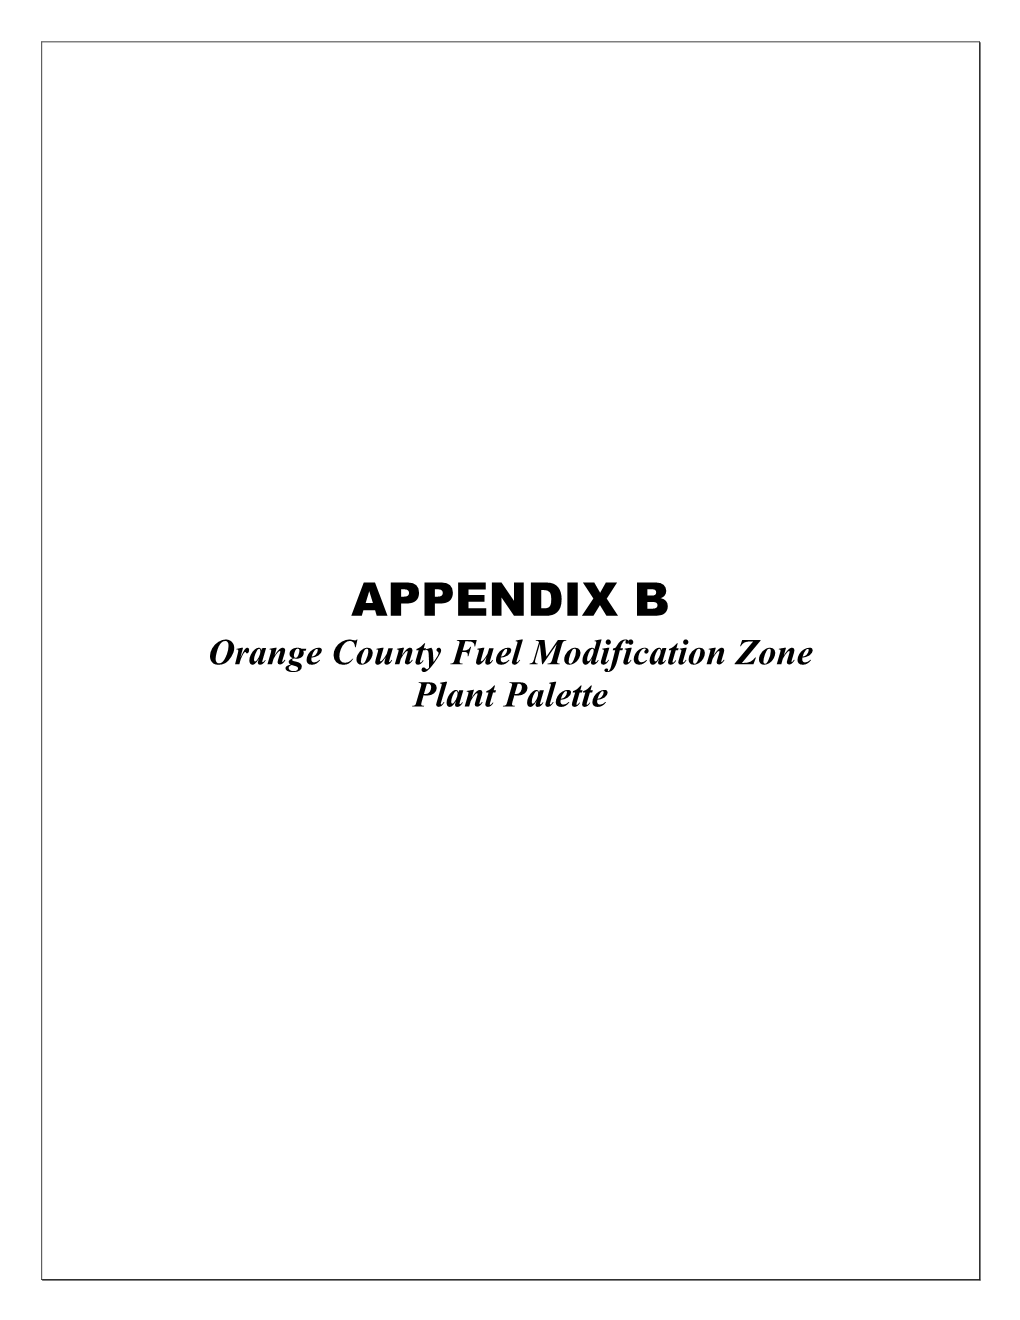 APPENDIX B Orange County Fuel Modification Zone Plant Palette